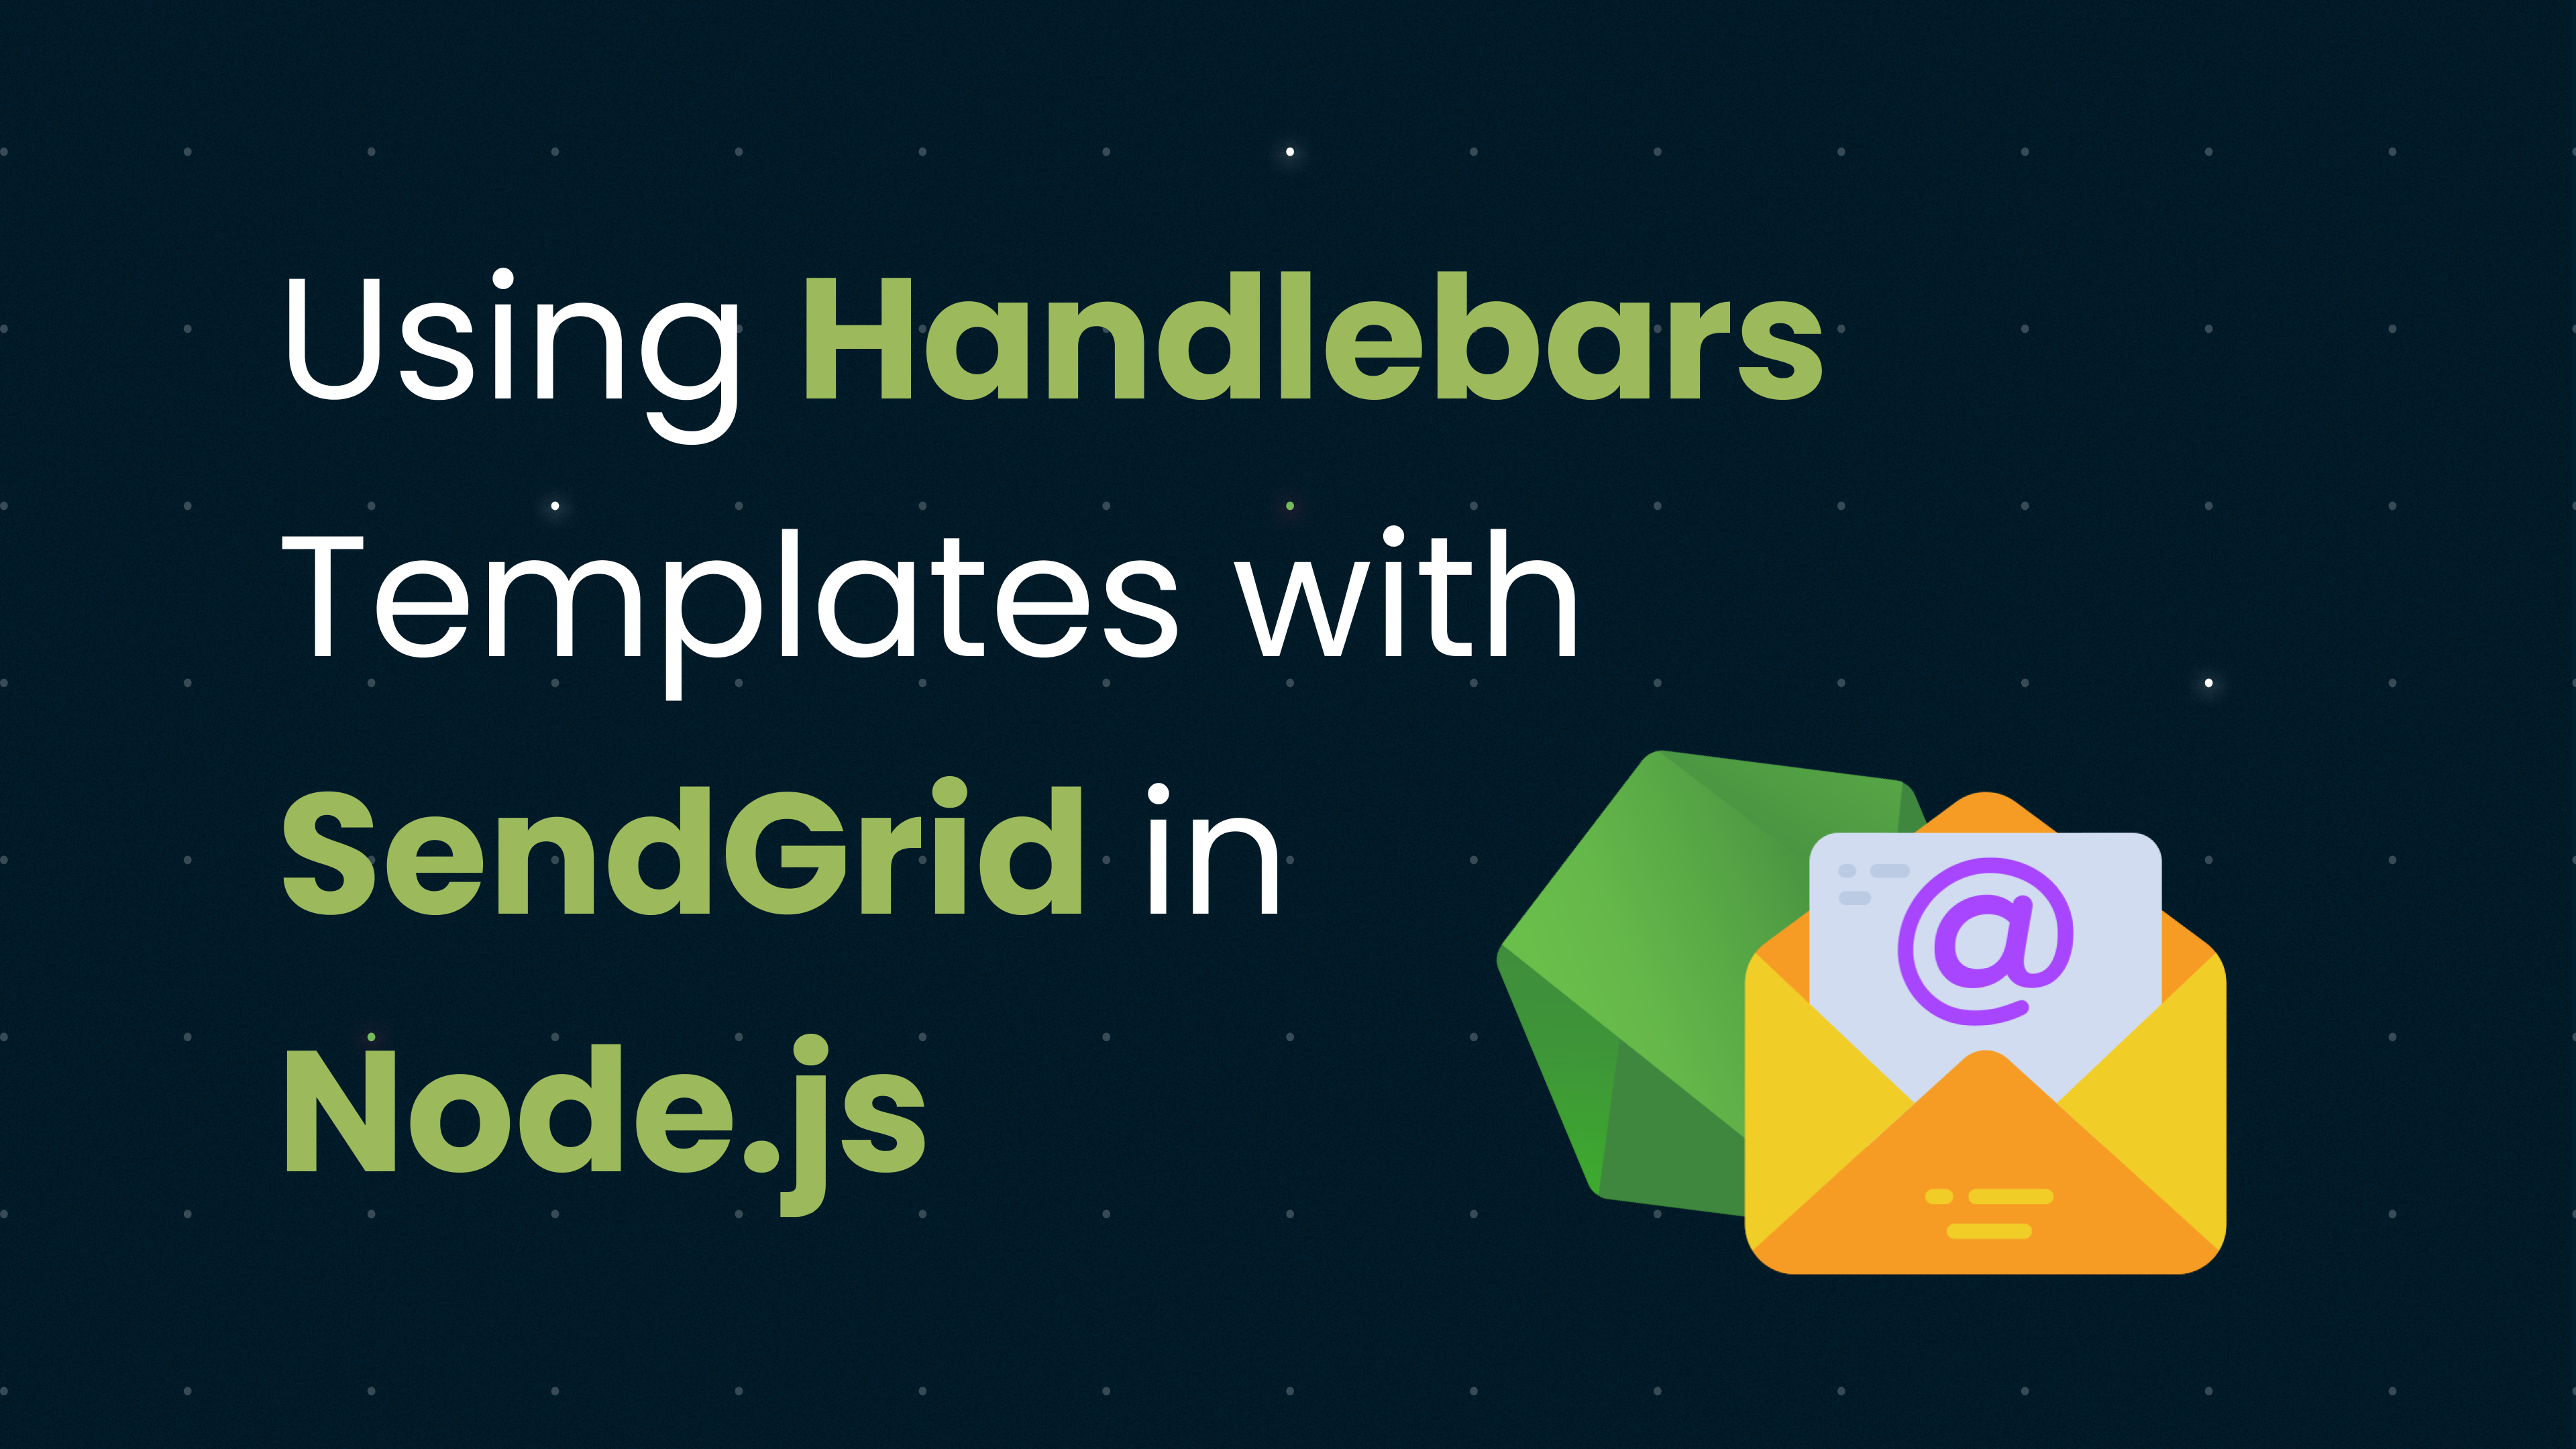 Using Handlebars Templates with SendGrid in Node.js